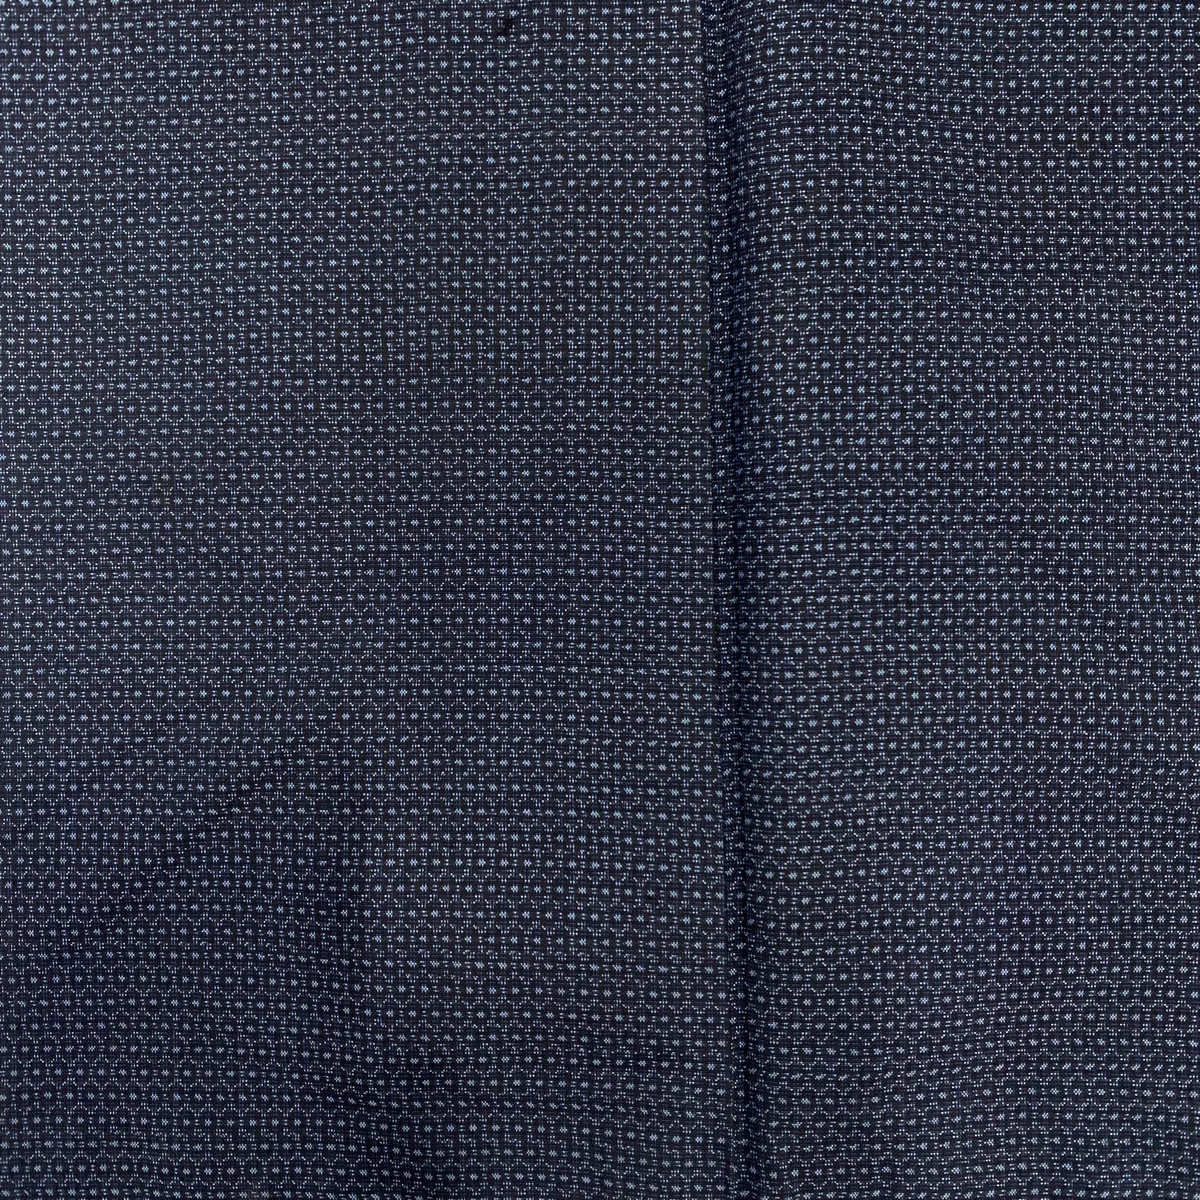  man kimono length 142.5cm sleeve length 66cm M. ensemble pongee . what . dark blue silk preeminence goods used 